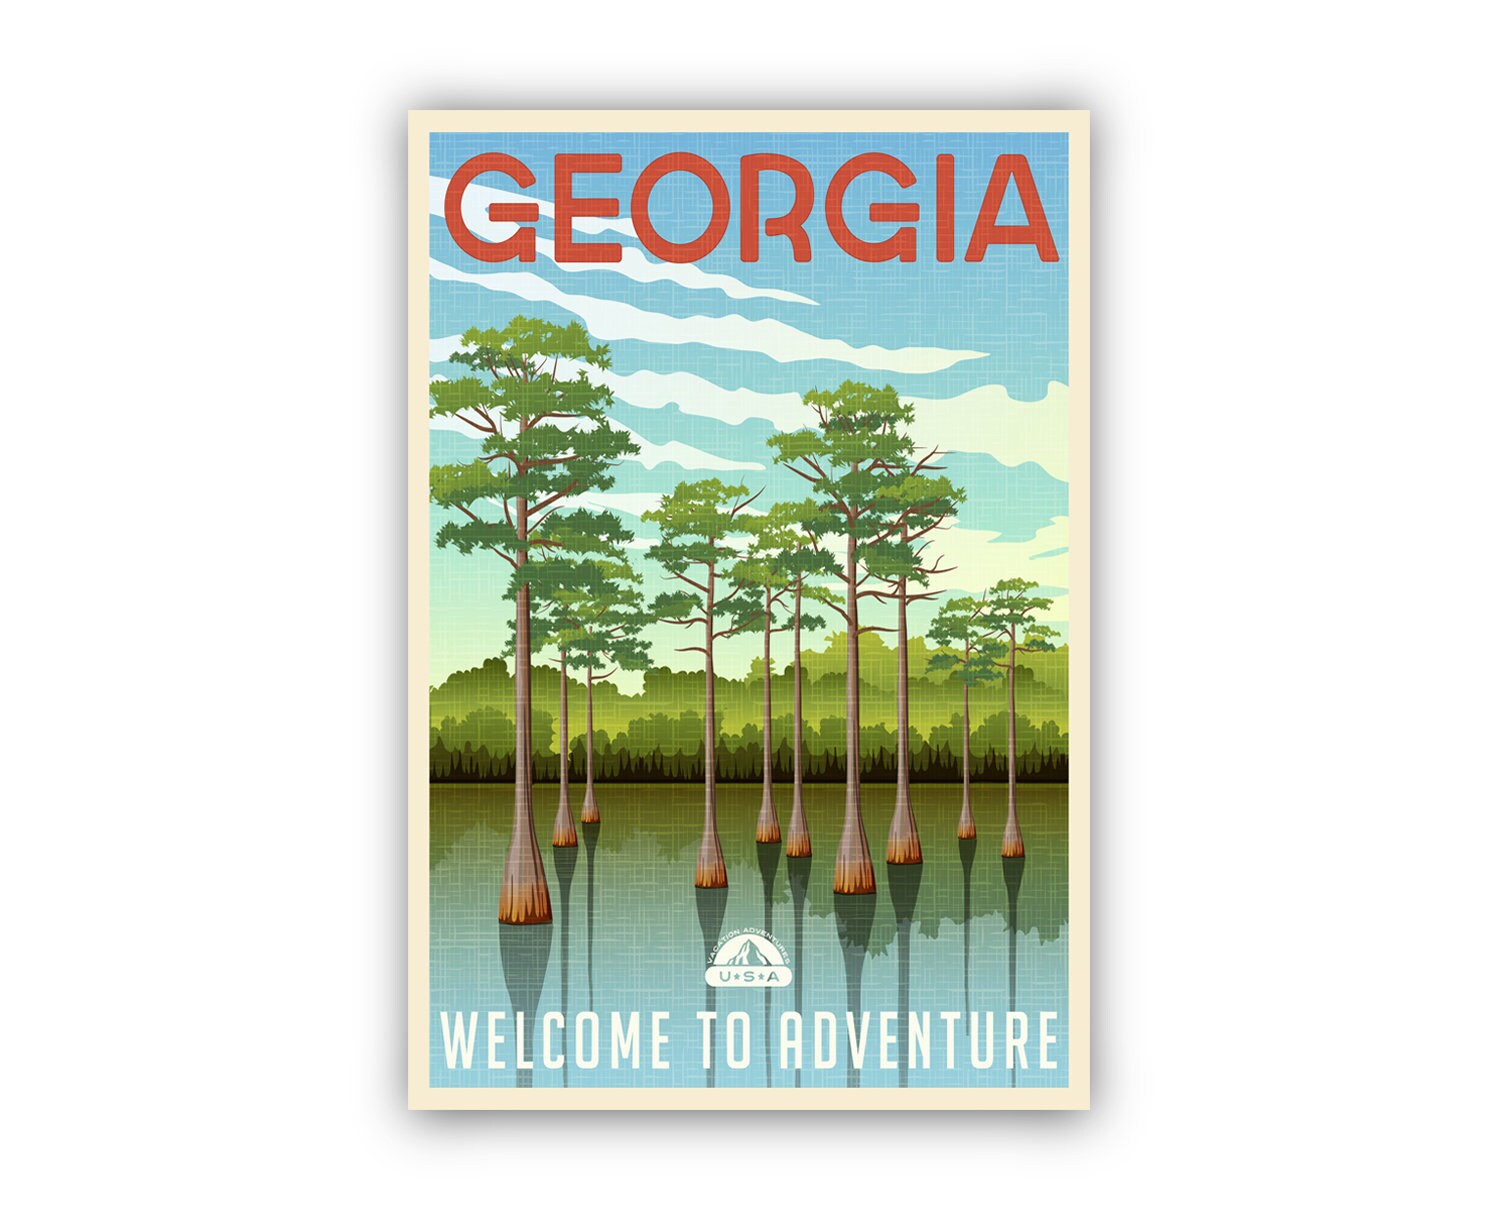 Georgia Vintage Rustic Poster Print